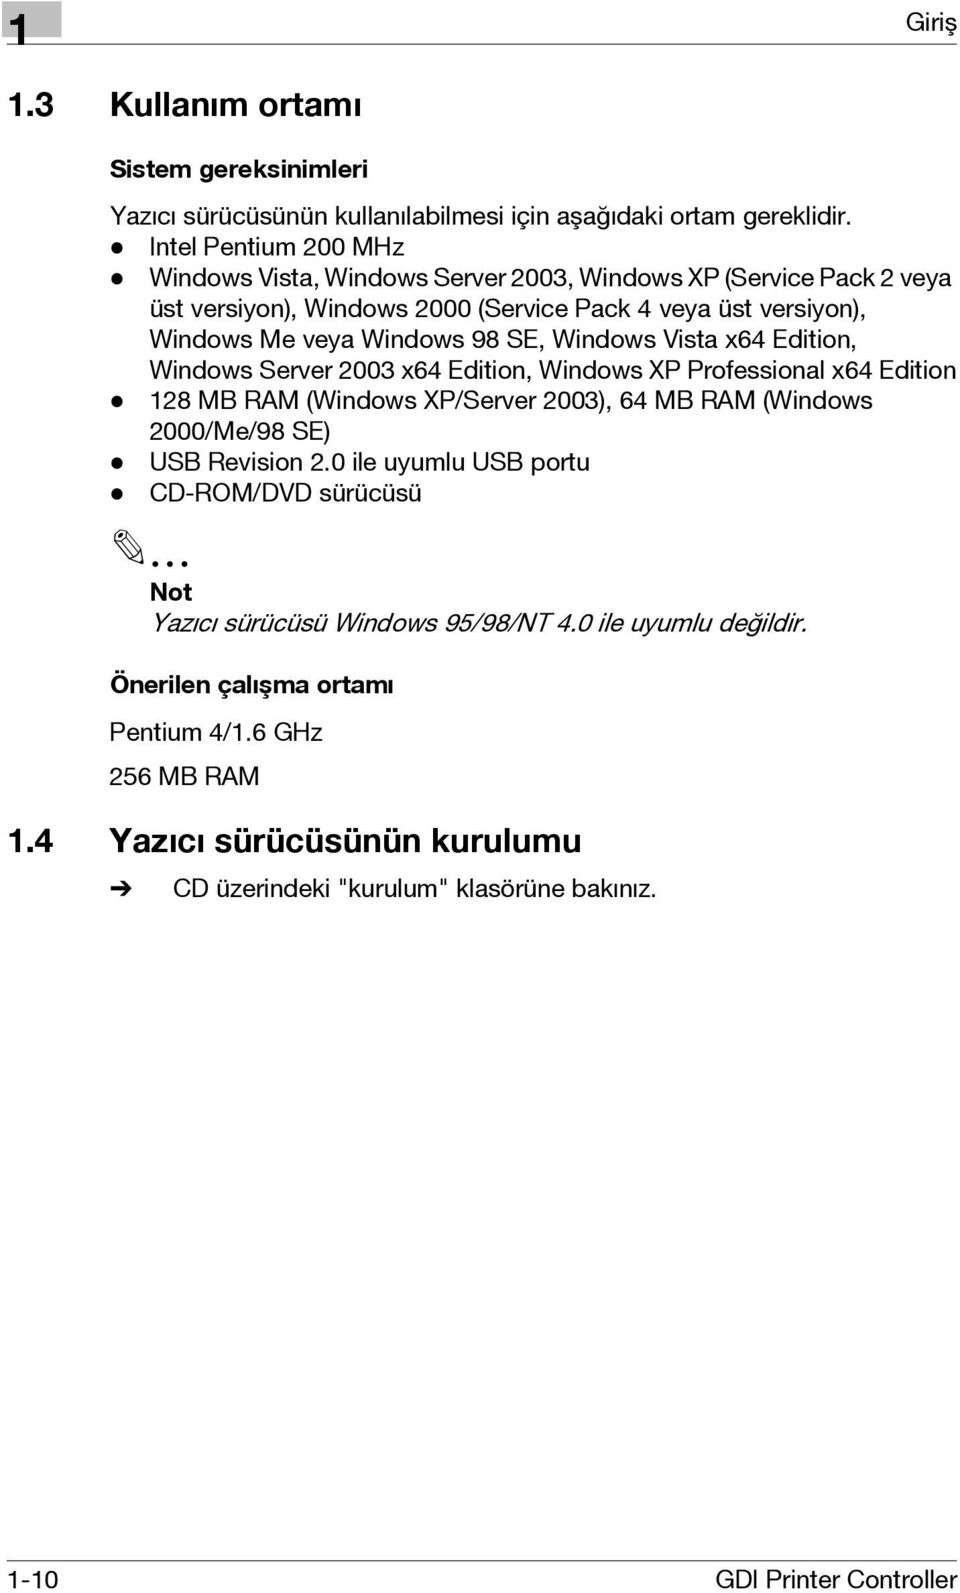 Windows Vista x64 Edition, Windows Server 003 x64 Edition, Windows XP Professional x64 Edition - 18 MB RAM (Windows XP/Server 003), 64 MB RAM (Windows 000/Me/98 SE) - USB Revision.